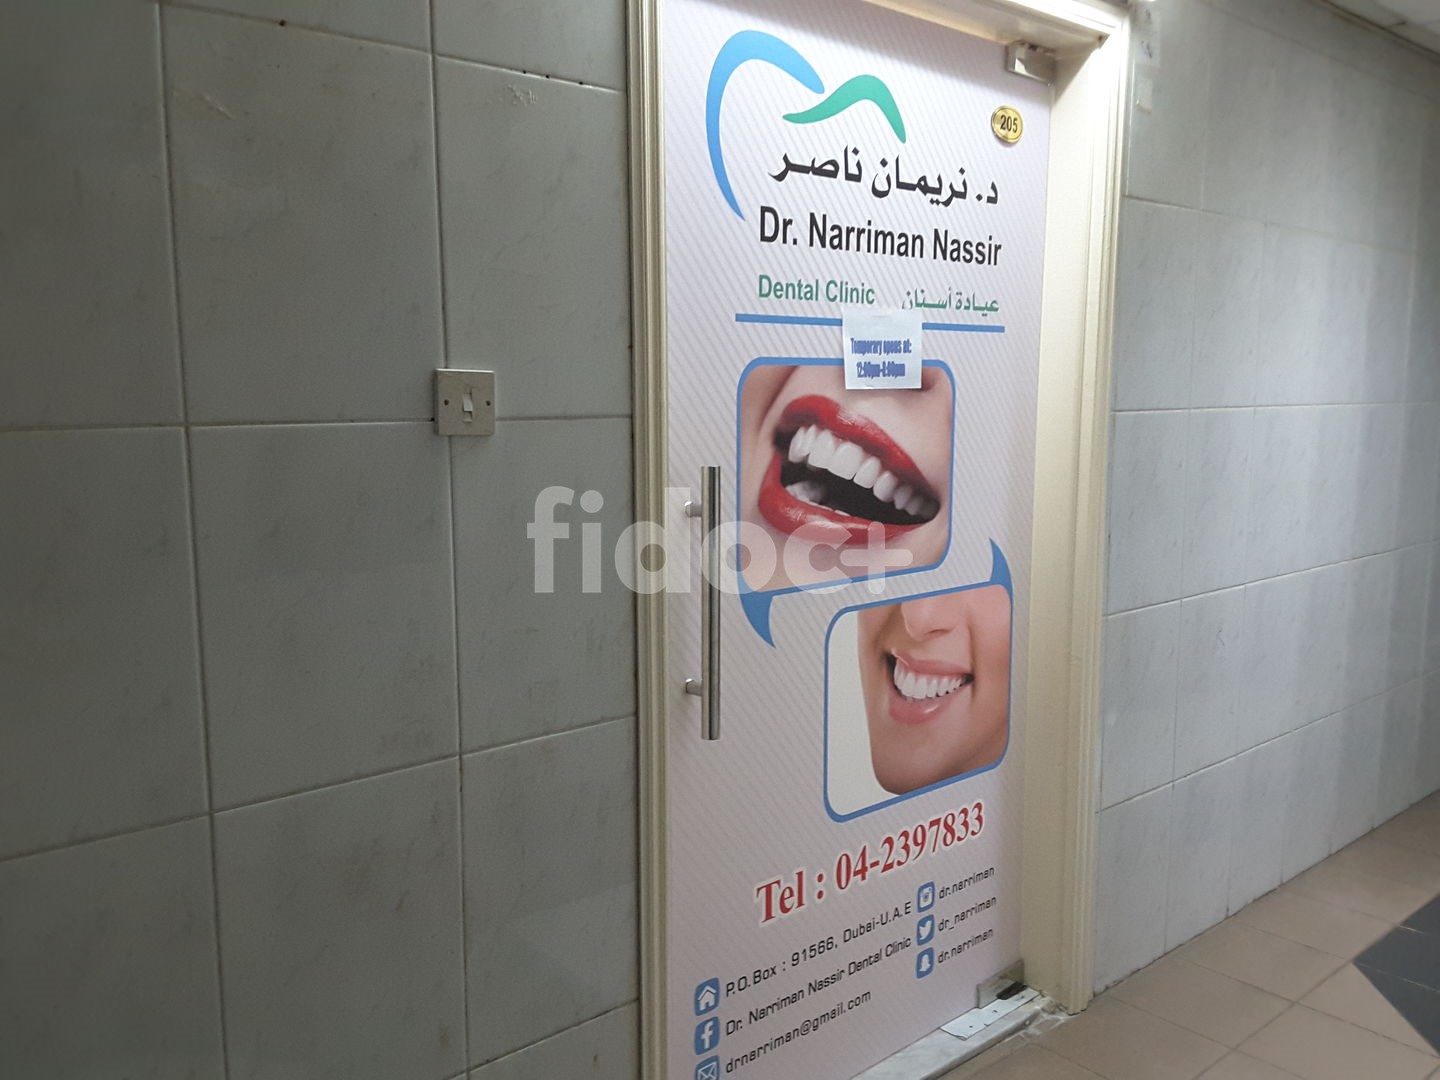 Dr. Narriman Nassir Dental Clinic, Dubai